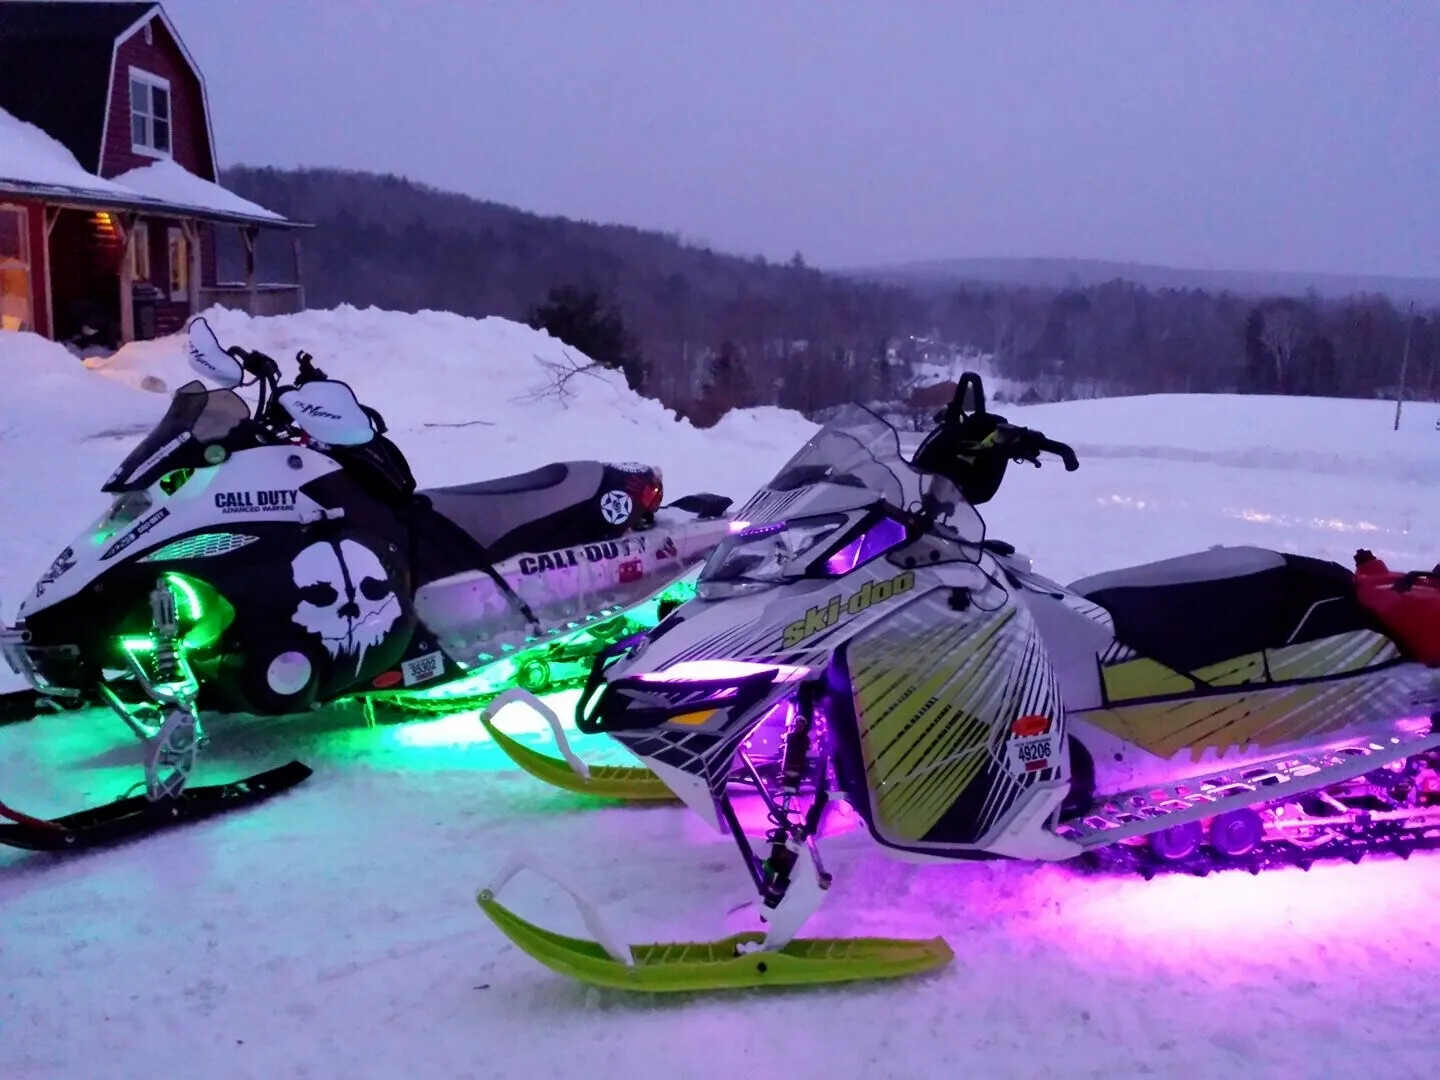 ski doo led underglow lights